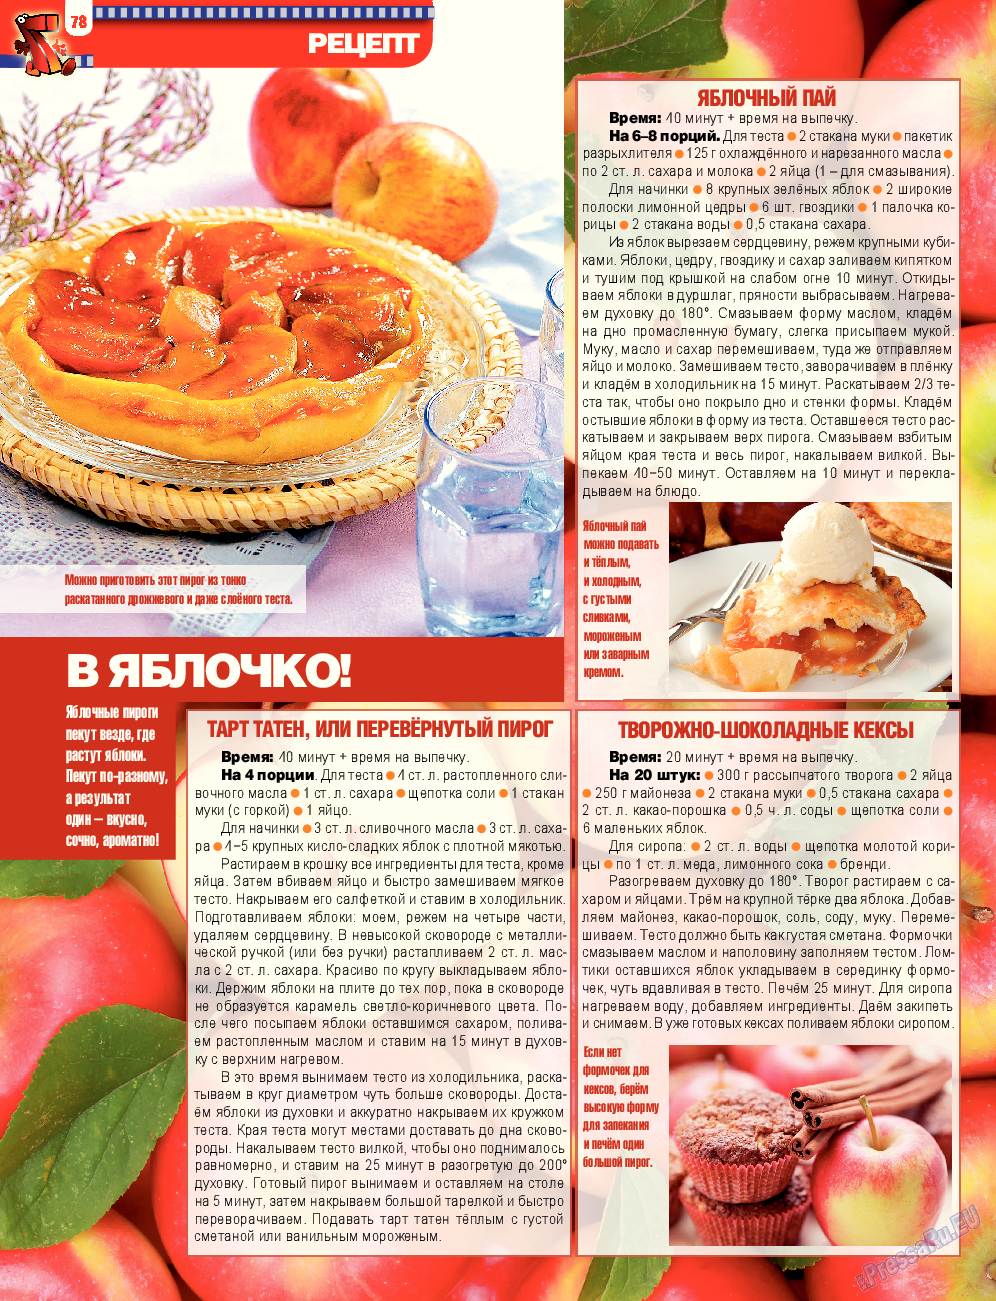 7плюс7я (журнал). 2013 год, номер 34, стр. 78